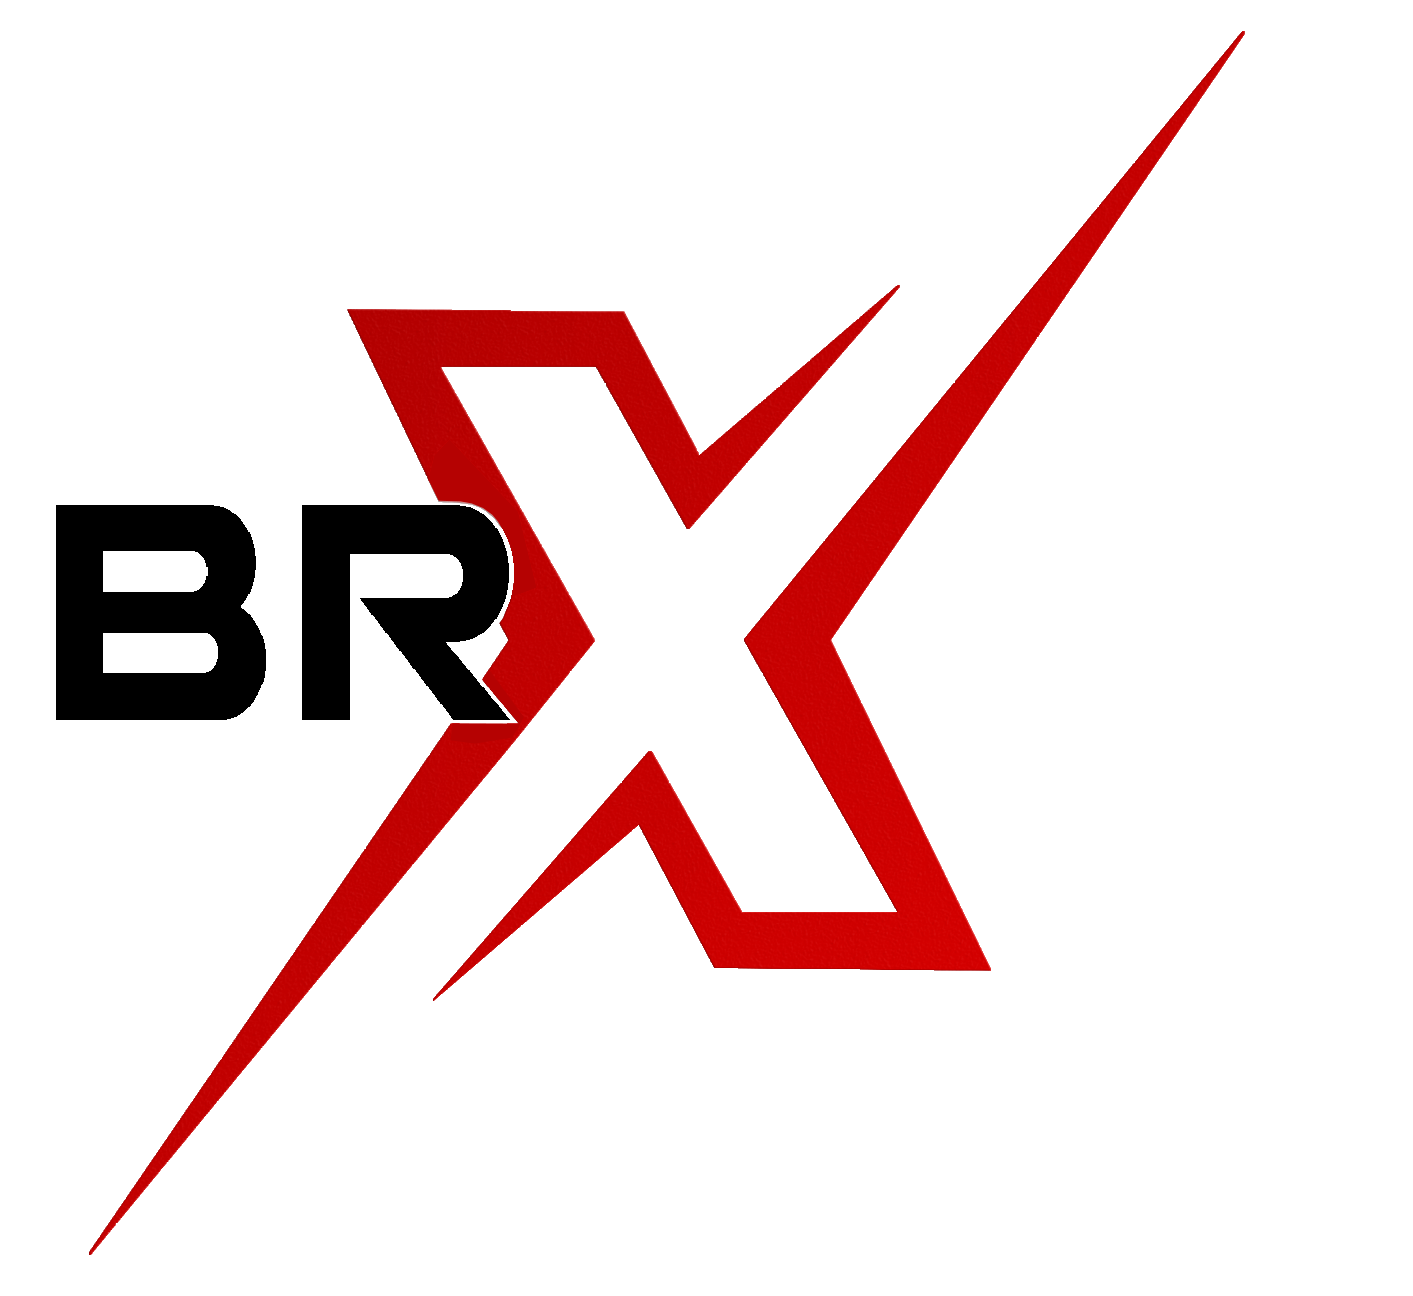 Logo BRX